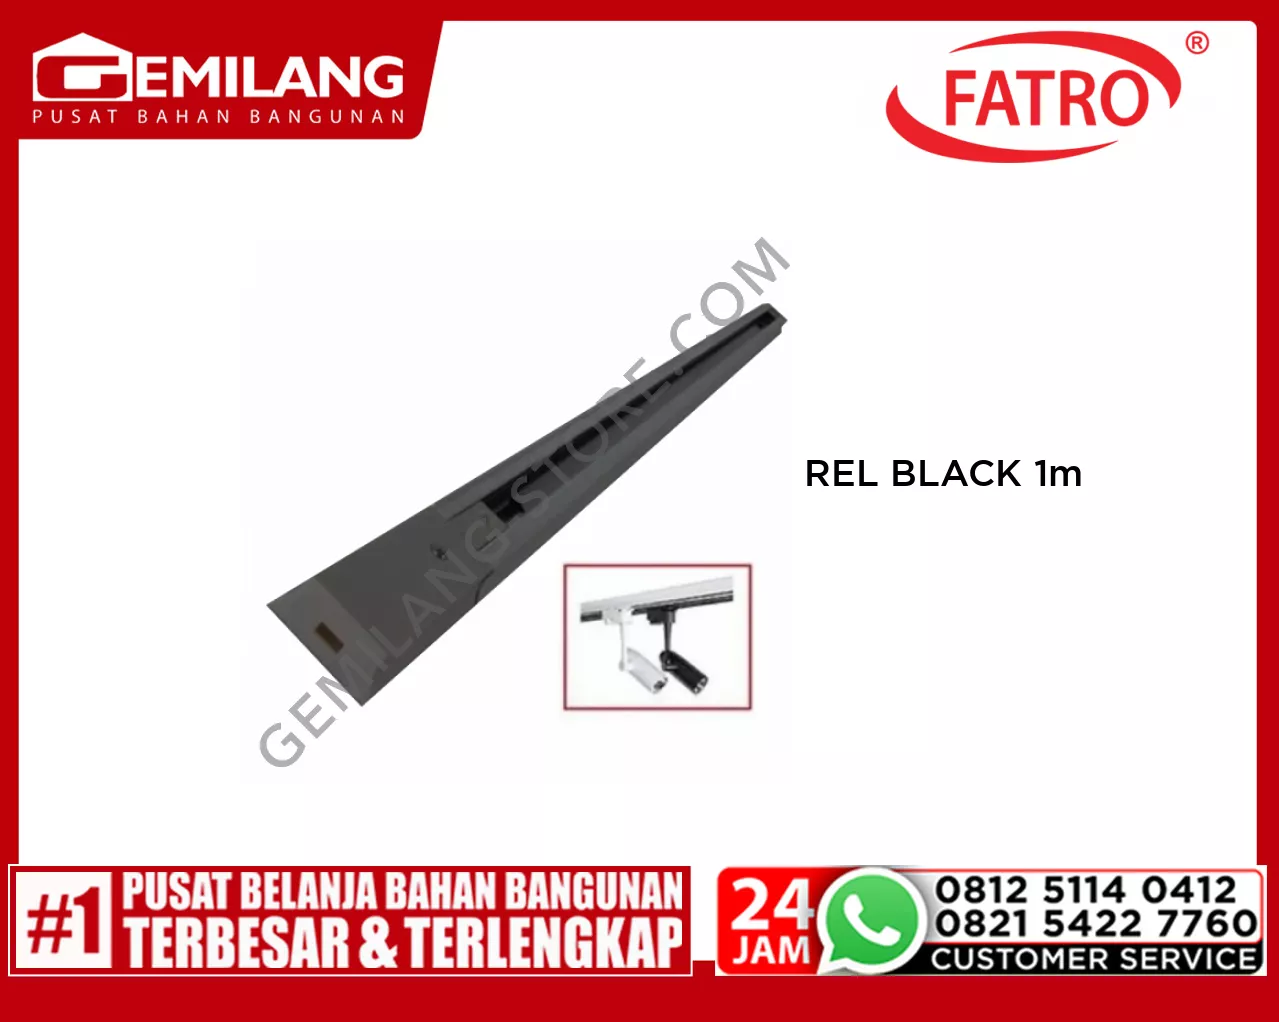 FATRO REL BLACK 1m